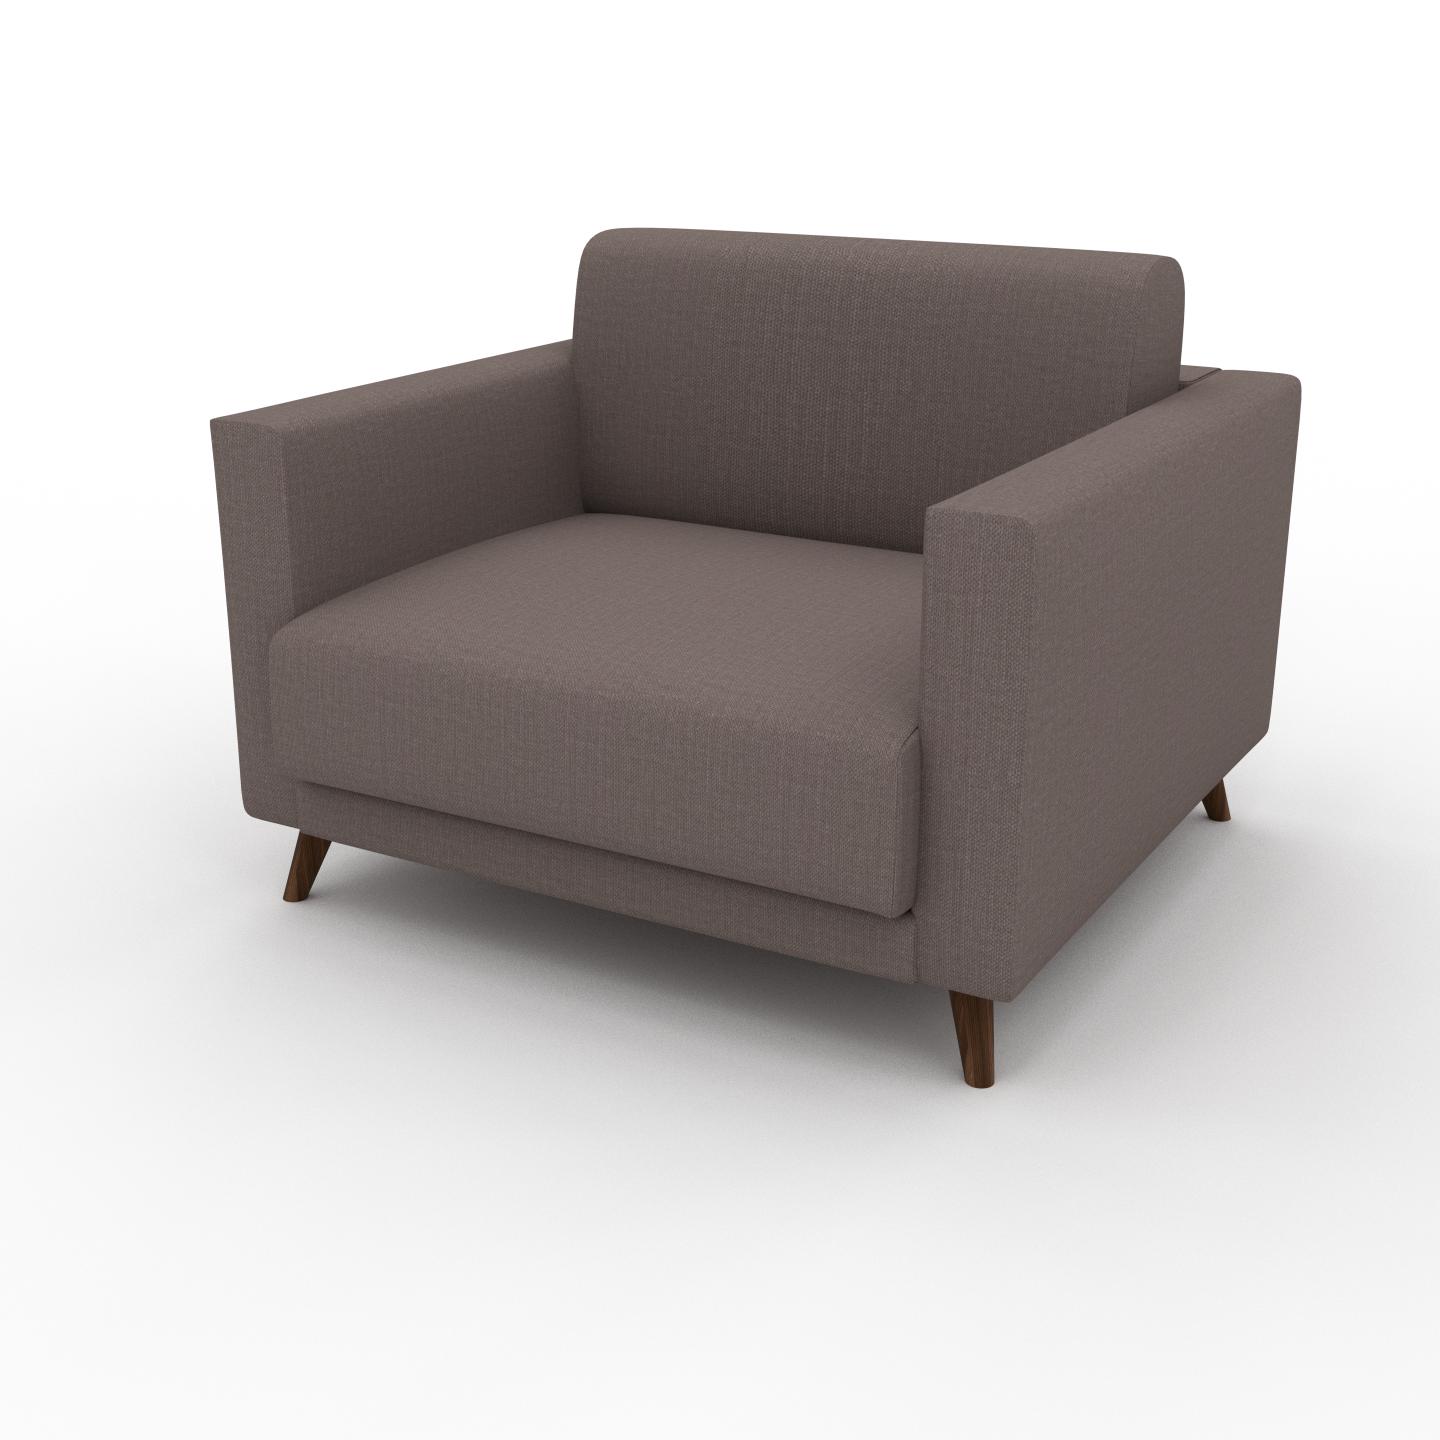 MYCS Sessel Taupegrau - Eleganter Sessel: Hochwertige Qualität, einzigartiges Design - 105 x 75 x 98 cm, Individuell konfigurierbar